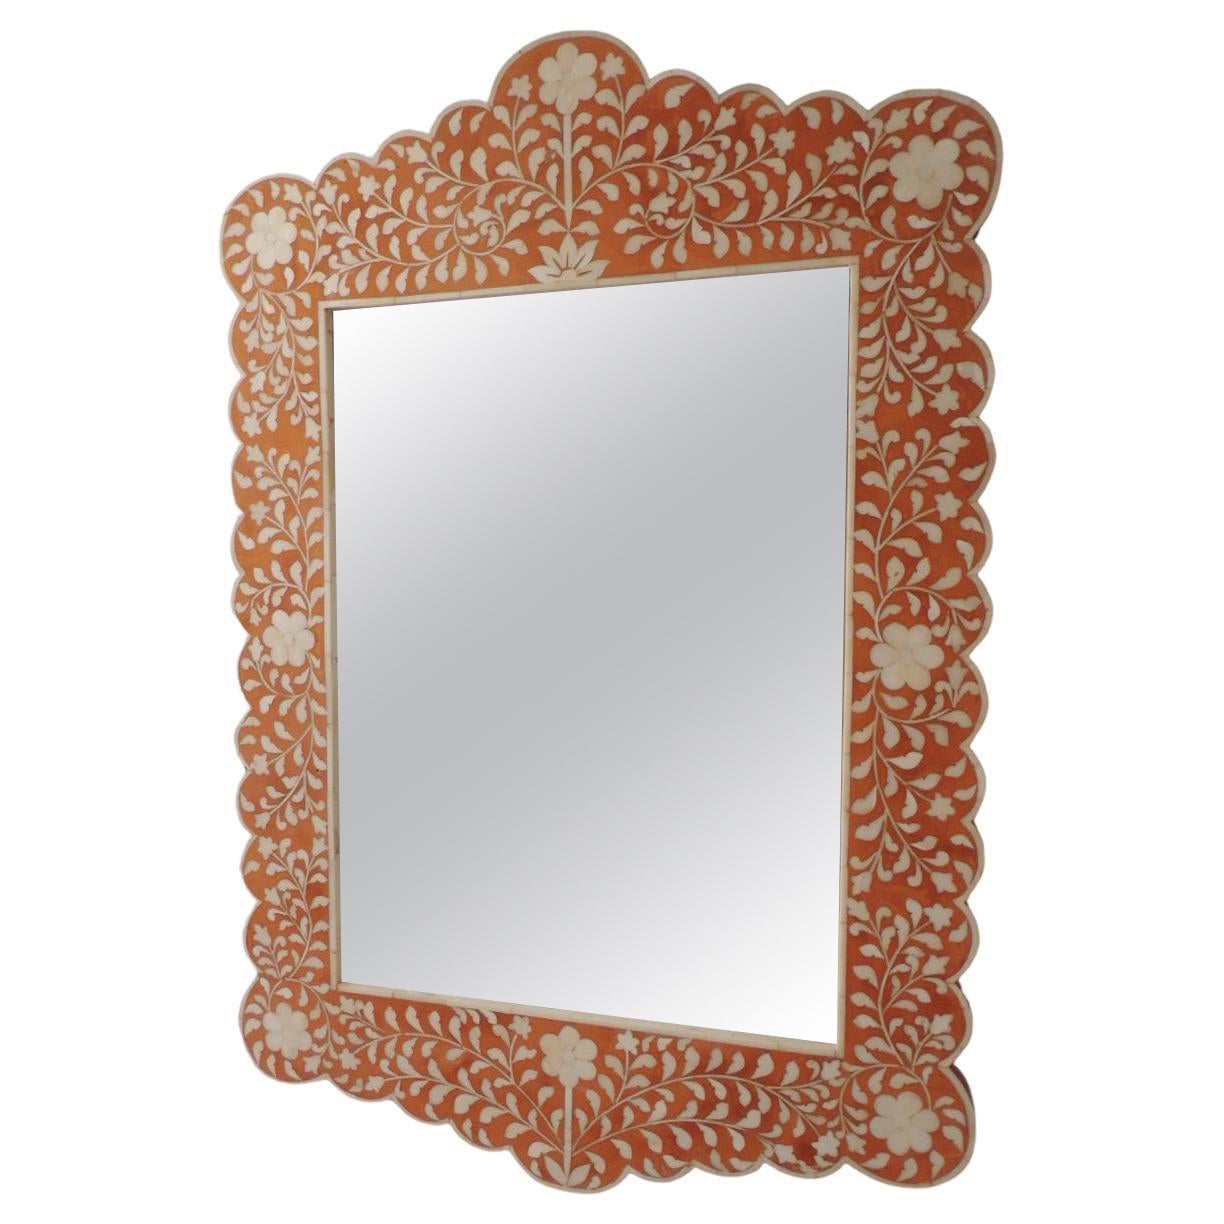 Orange & Natural Faux-Camel Bone Inlaid Floral Pattern Mirror